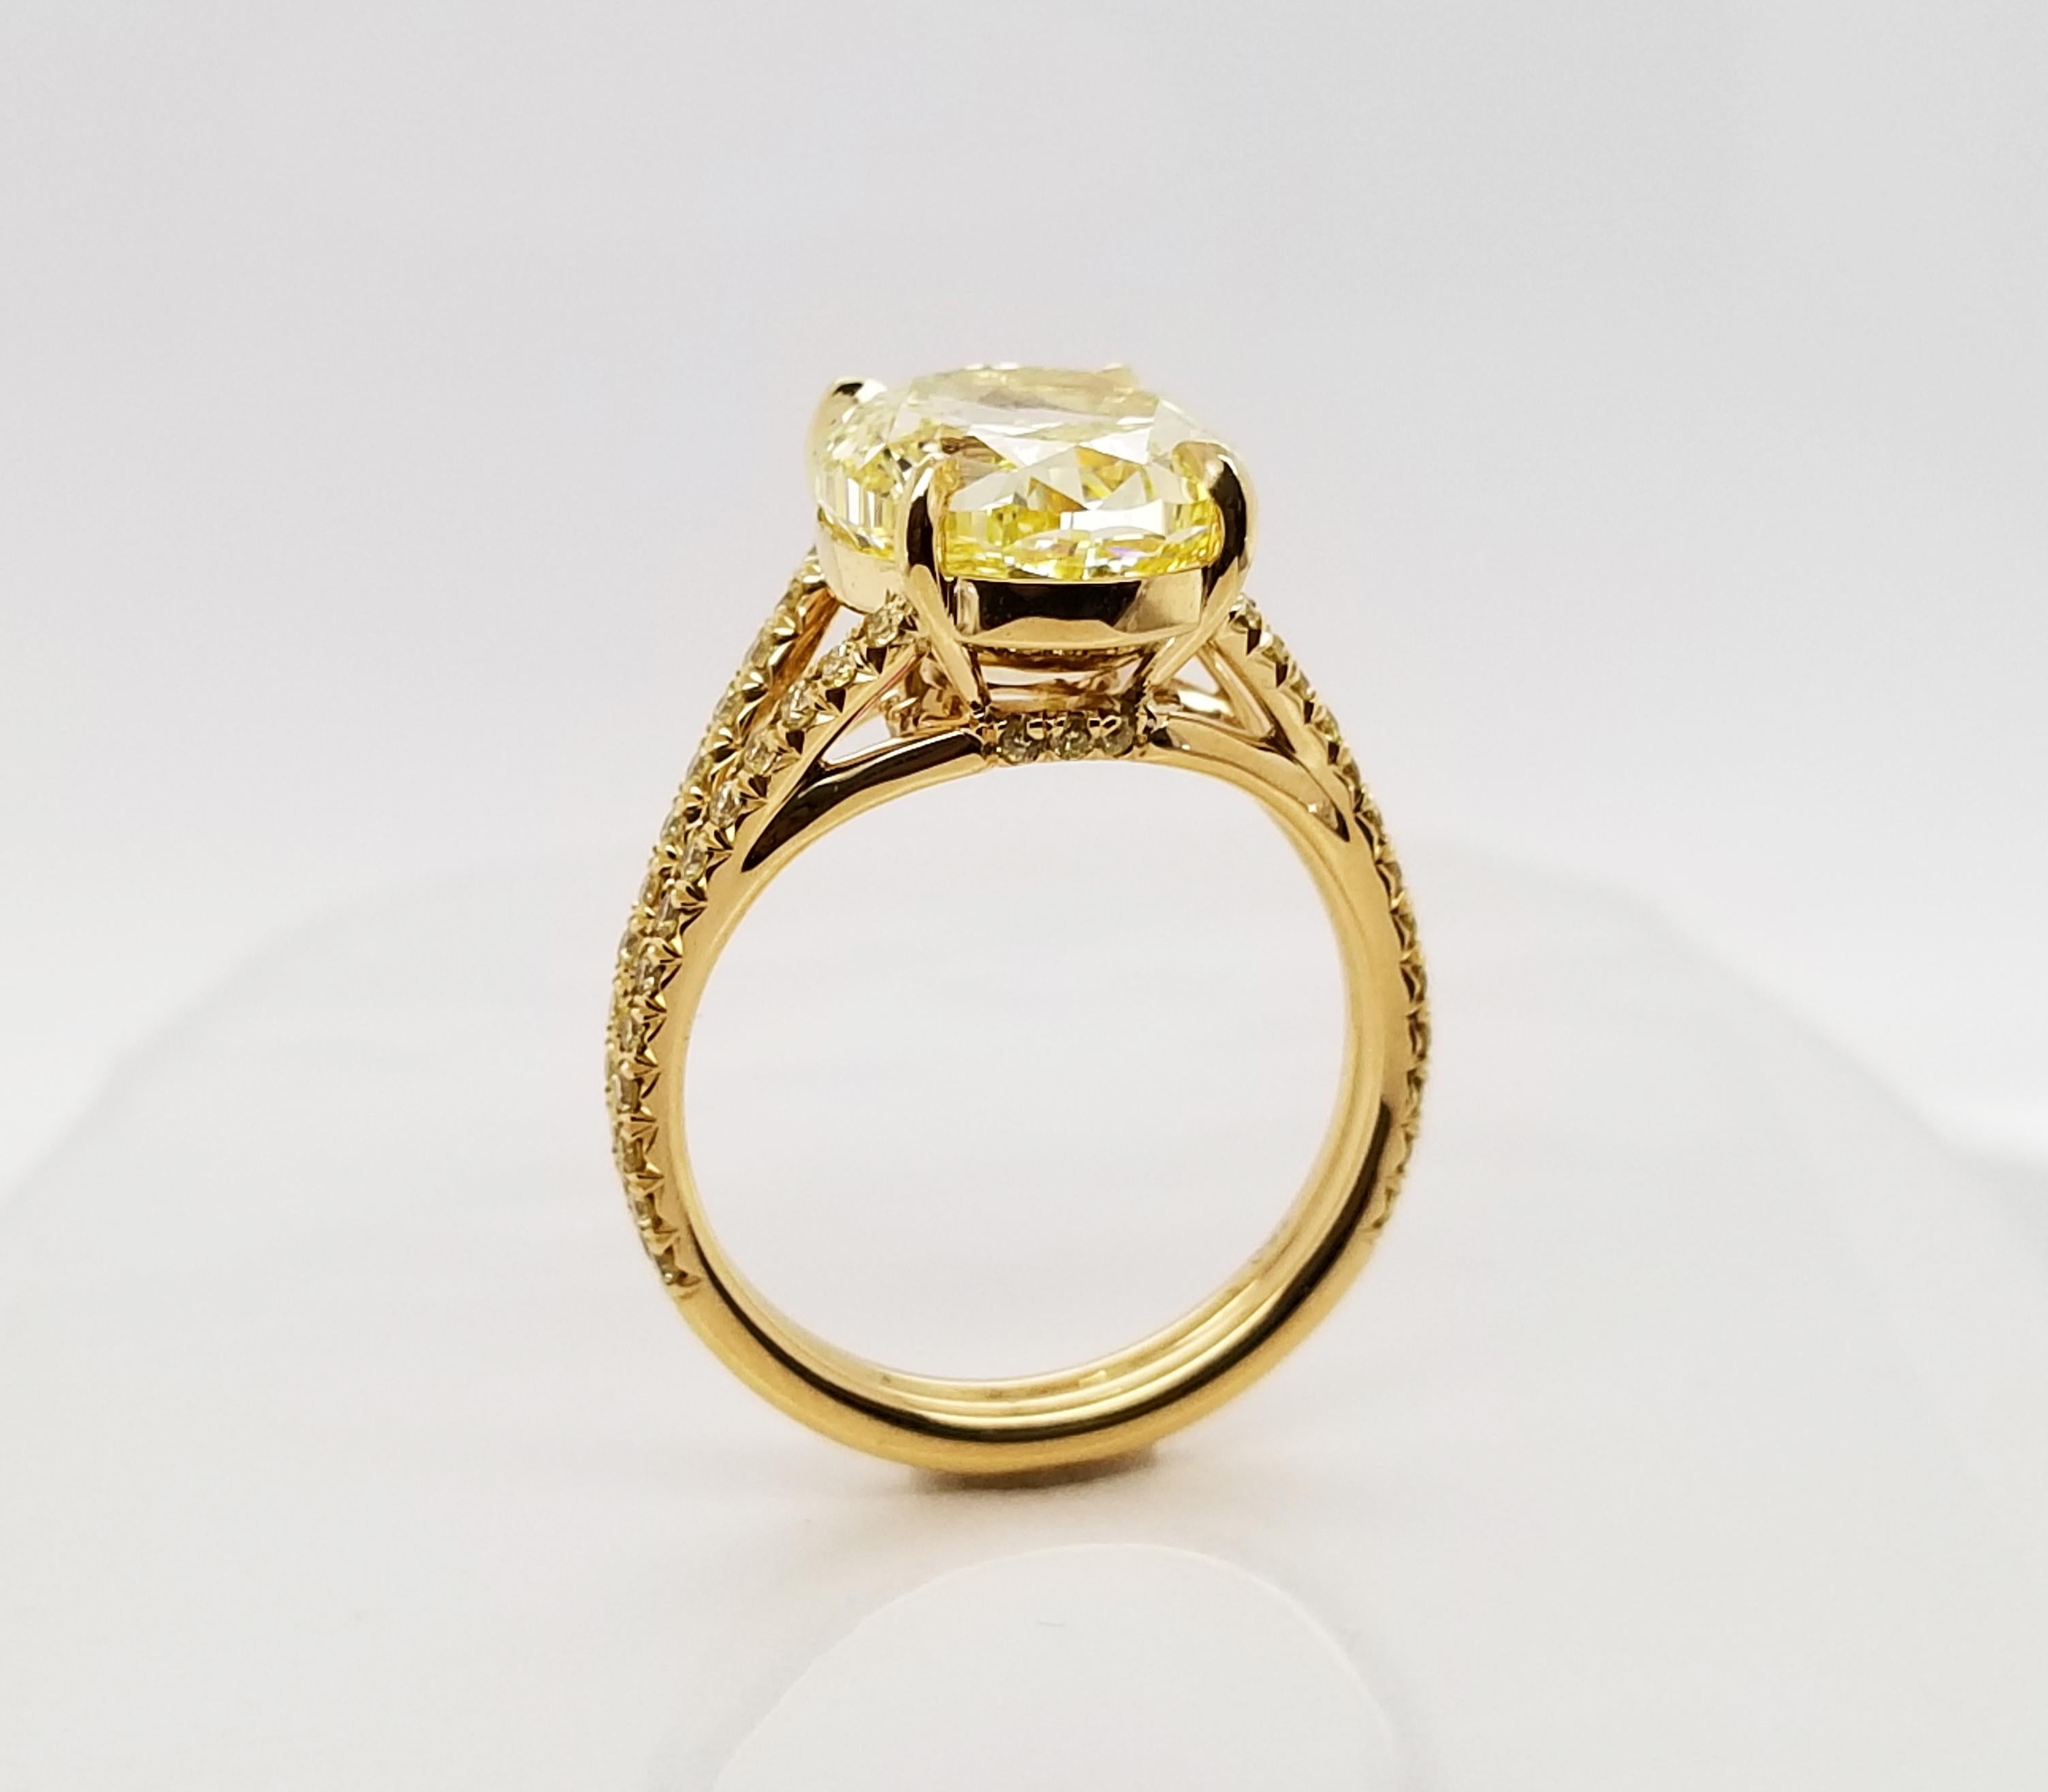 6 carat yellow diamond ring